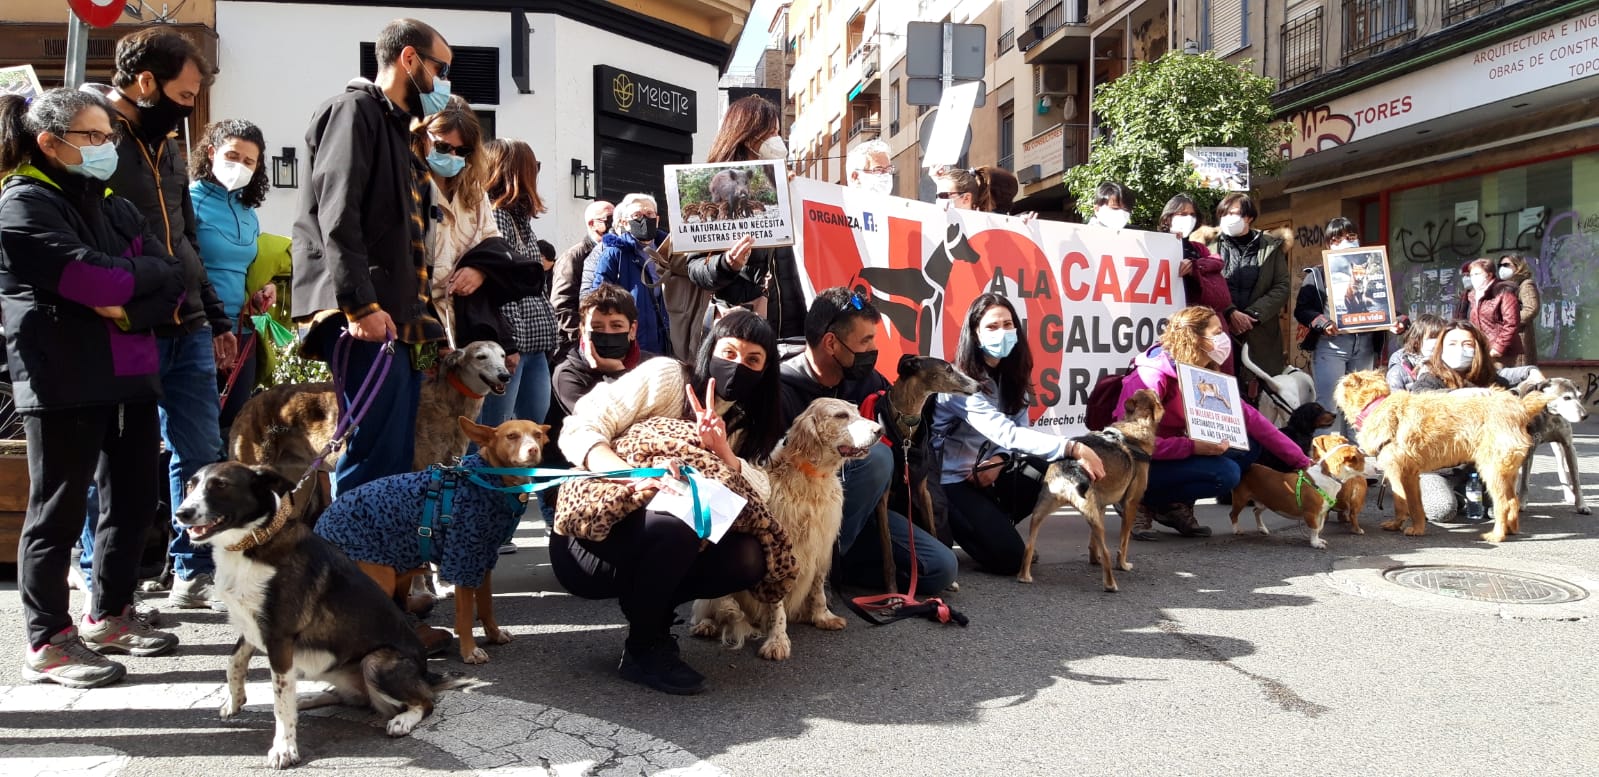 Demonstration Cuenca